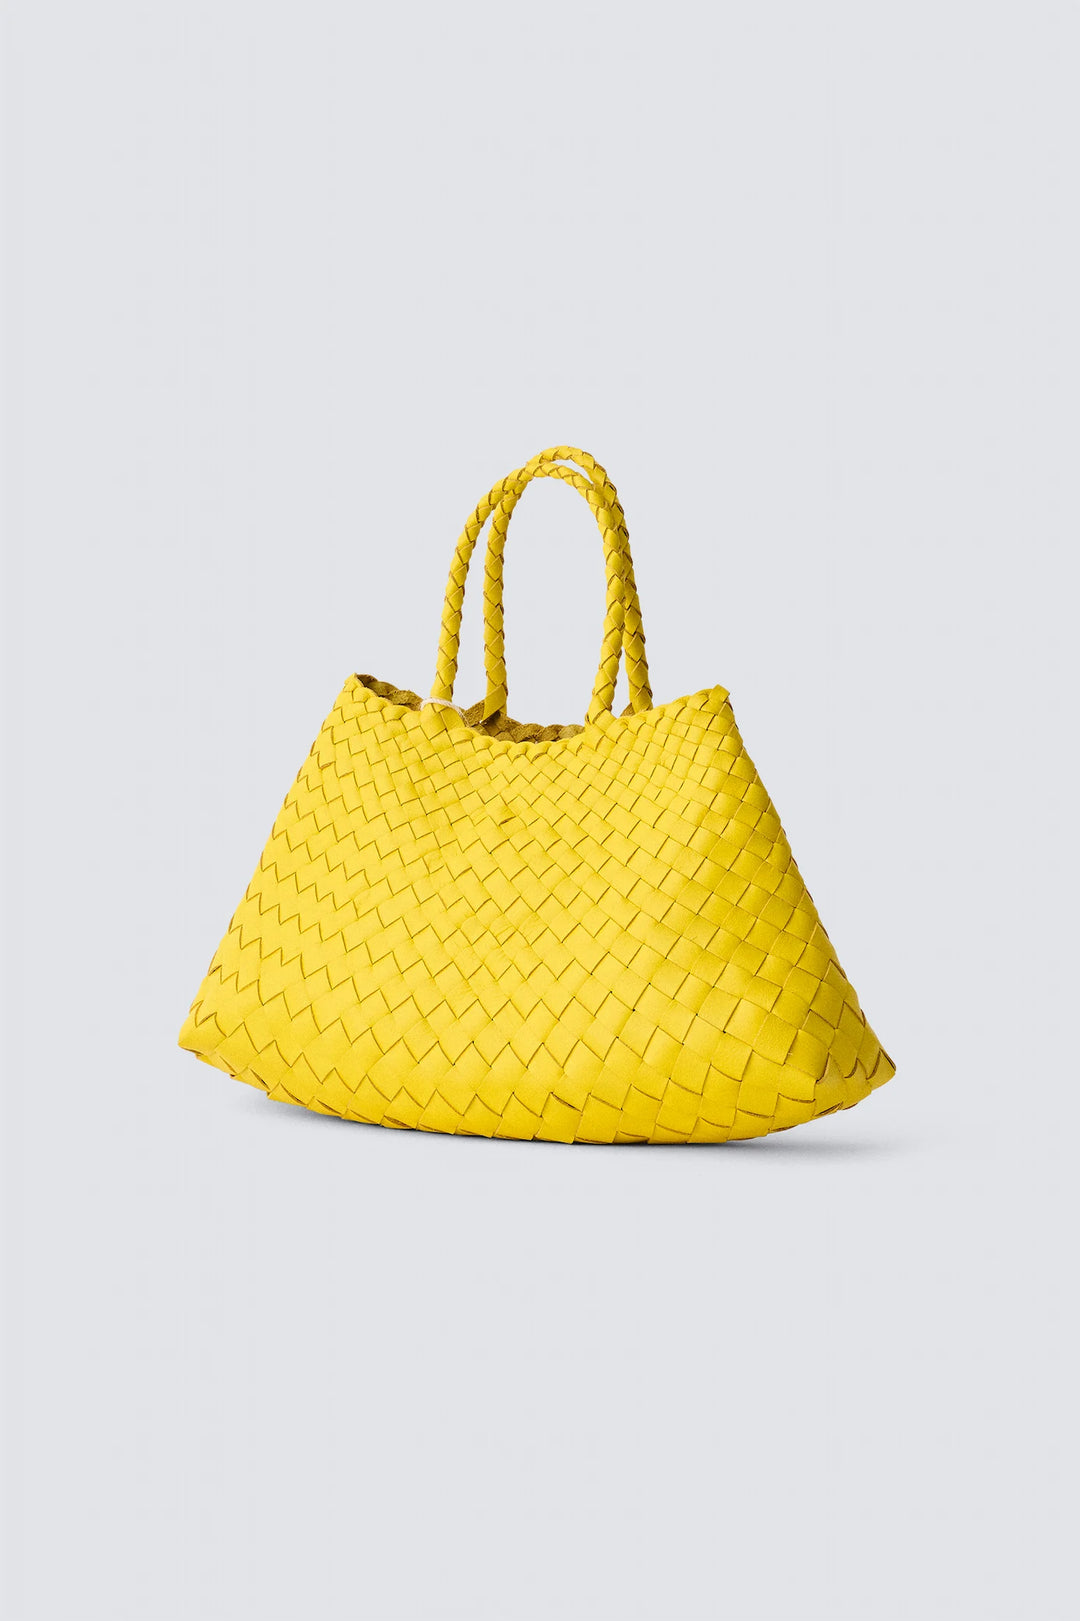 Dragon Diffusion - Santa Croce Small Yellow - Woven Leather Bag Handmade